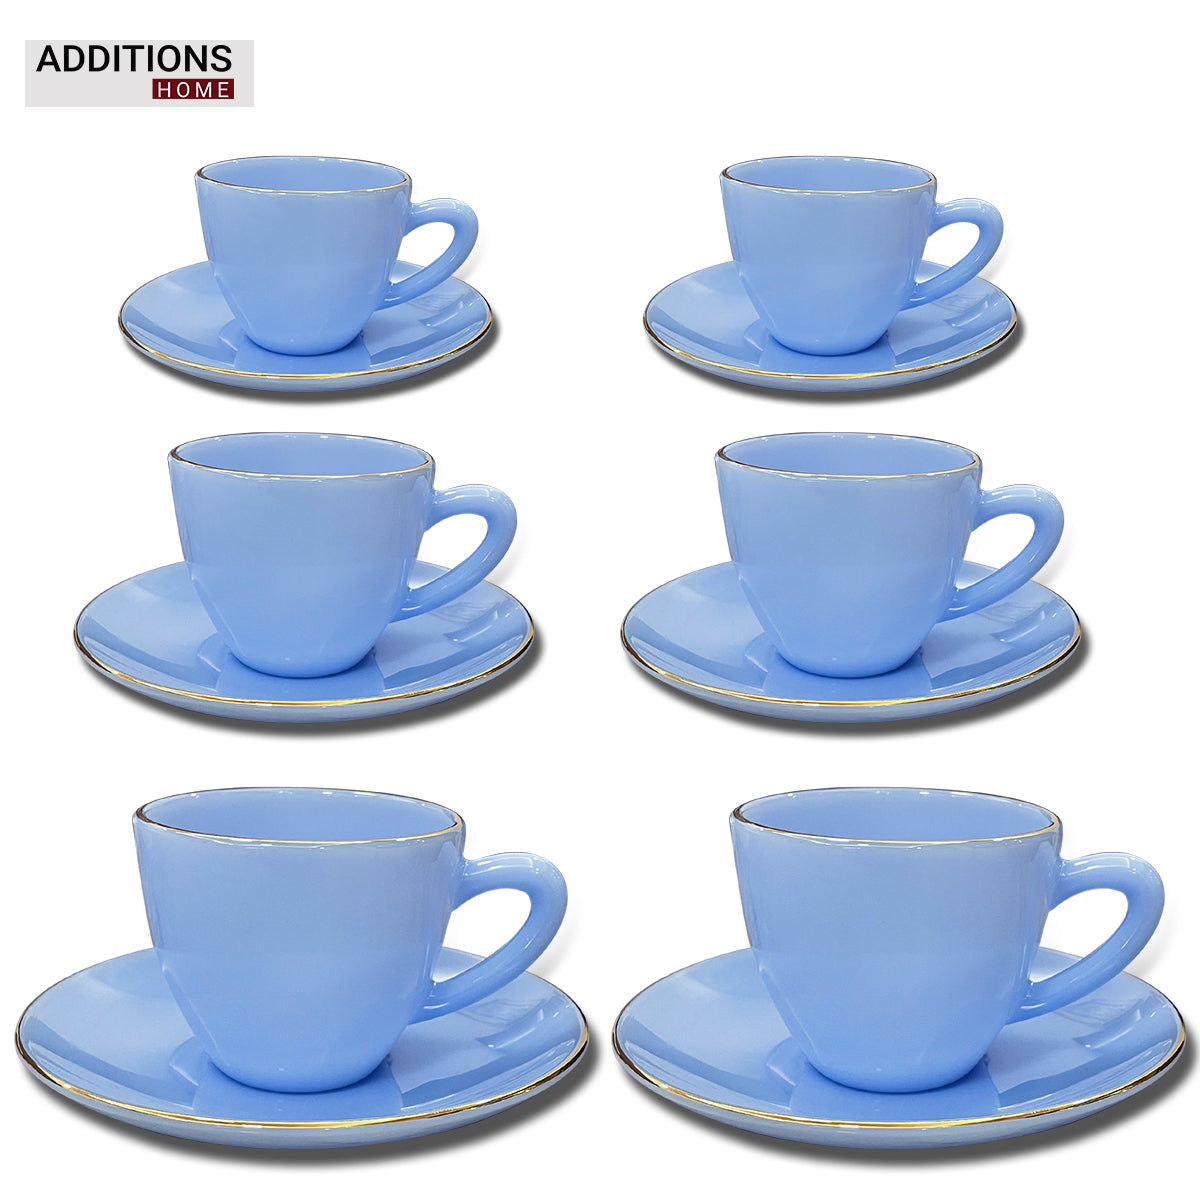 Tea/Coffee Cup & Saucer 12 piece set/ 6 Cups & 6 Saucer.